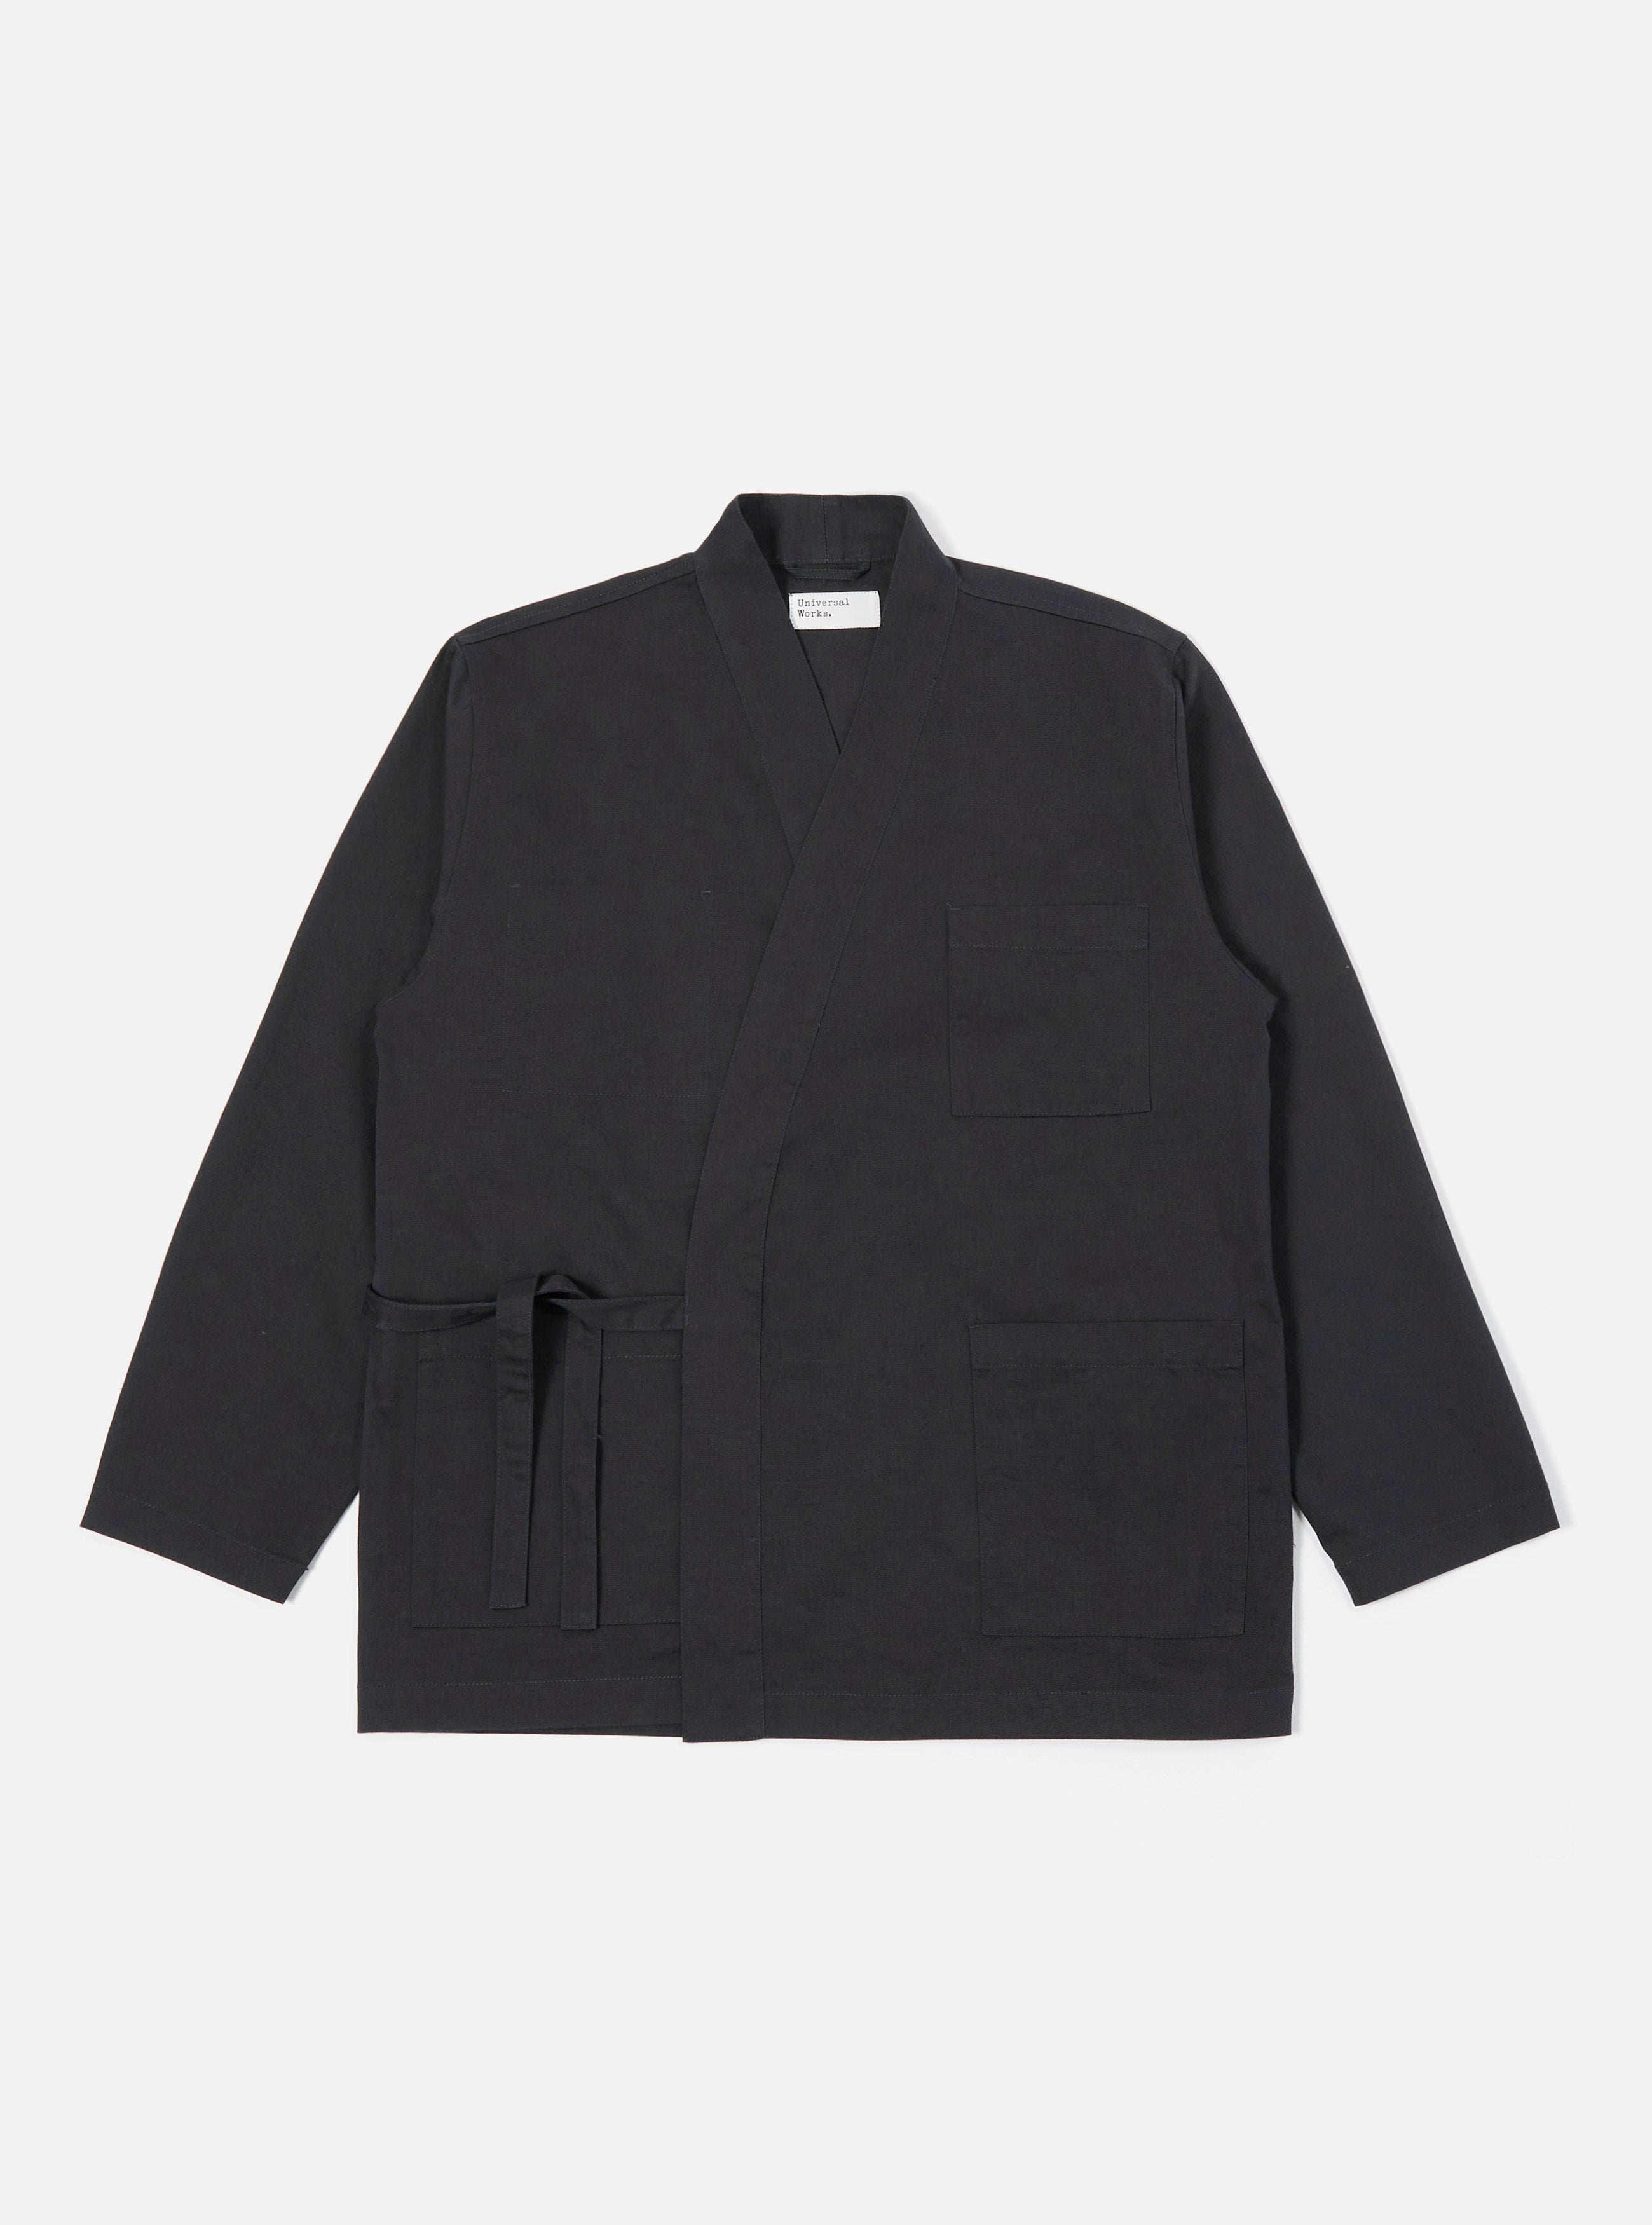 Universal Works Kyoto Work Jacket in Black Twill